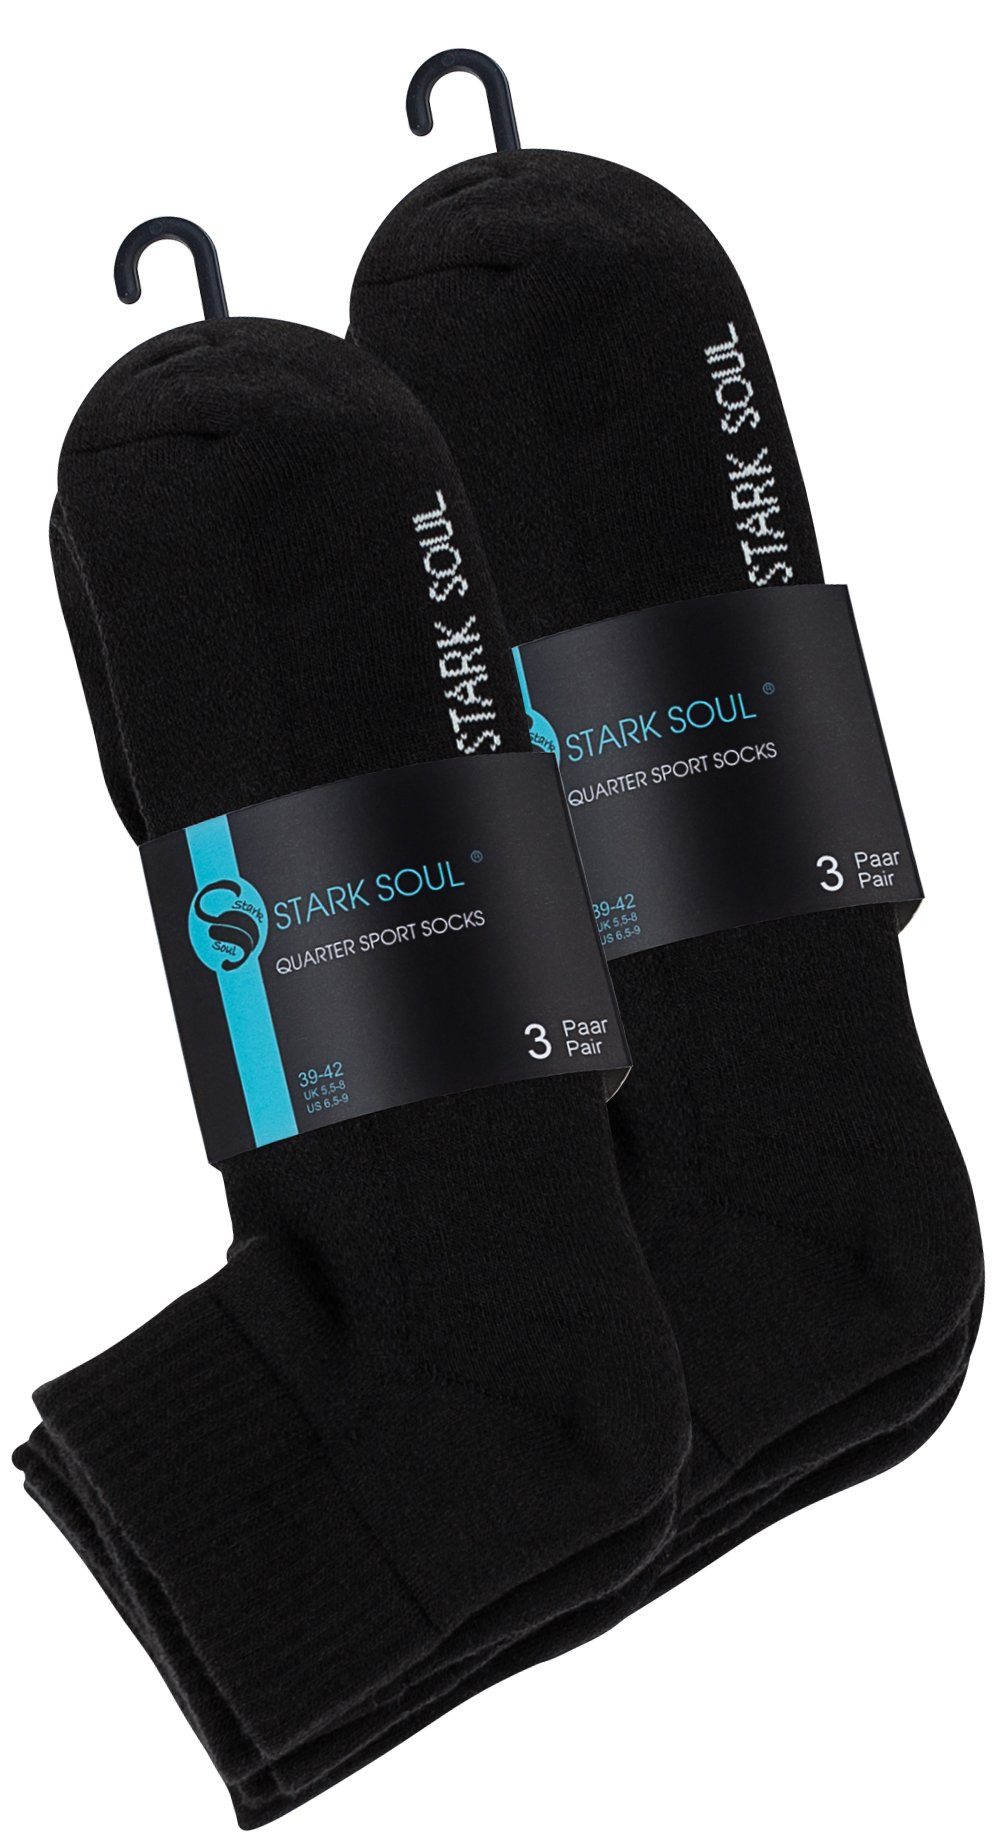 und Schwarz Socken-Sportsocken mit Sportsocken 6 Paar Quarter Mesh-Strick Stark Soul® Frotteesole